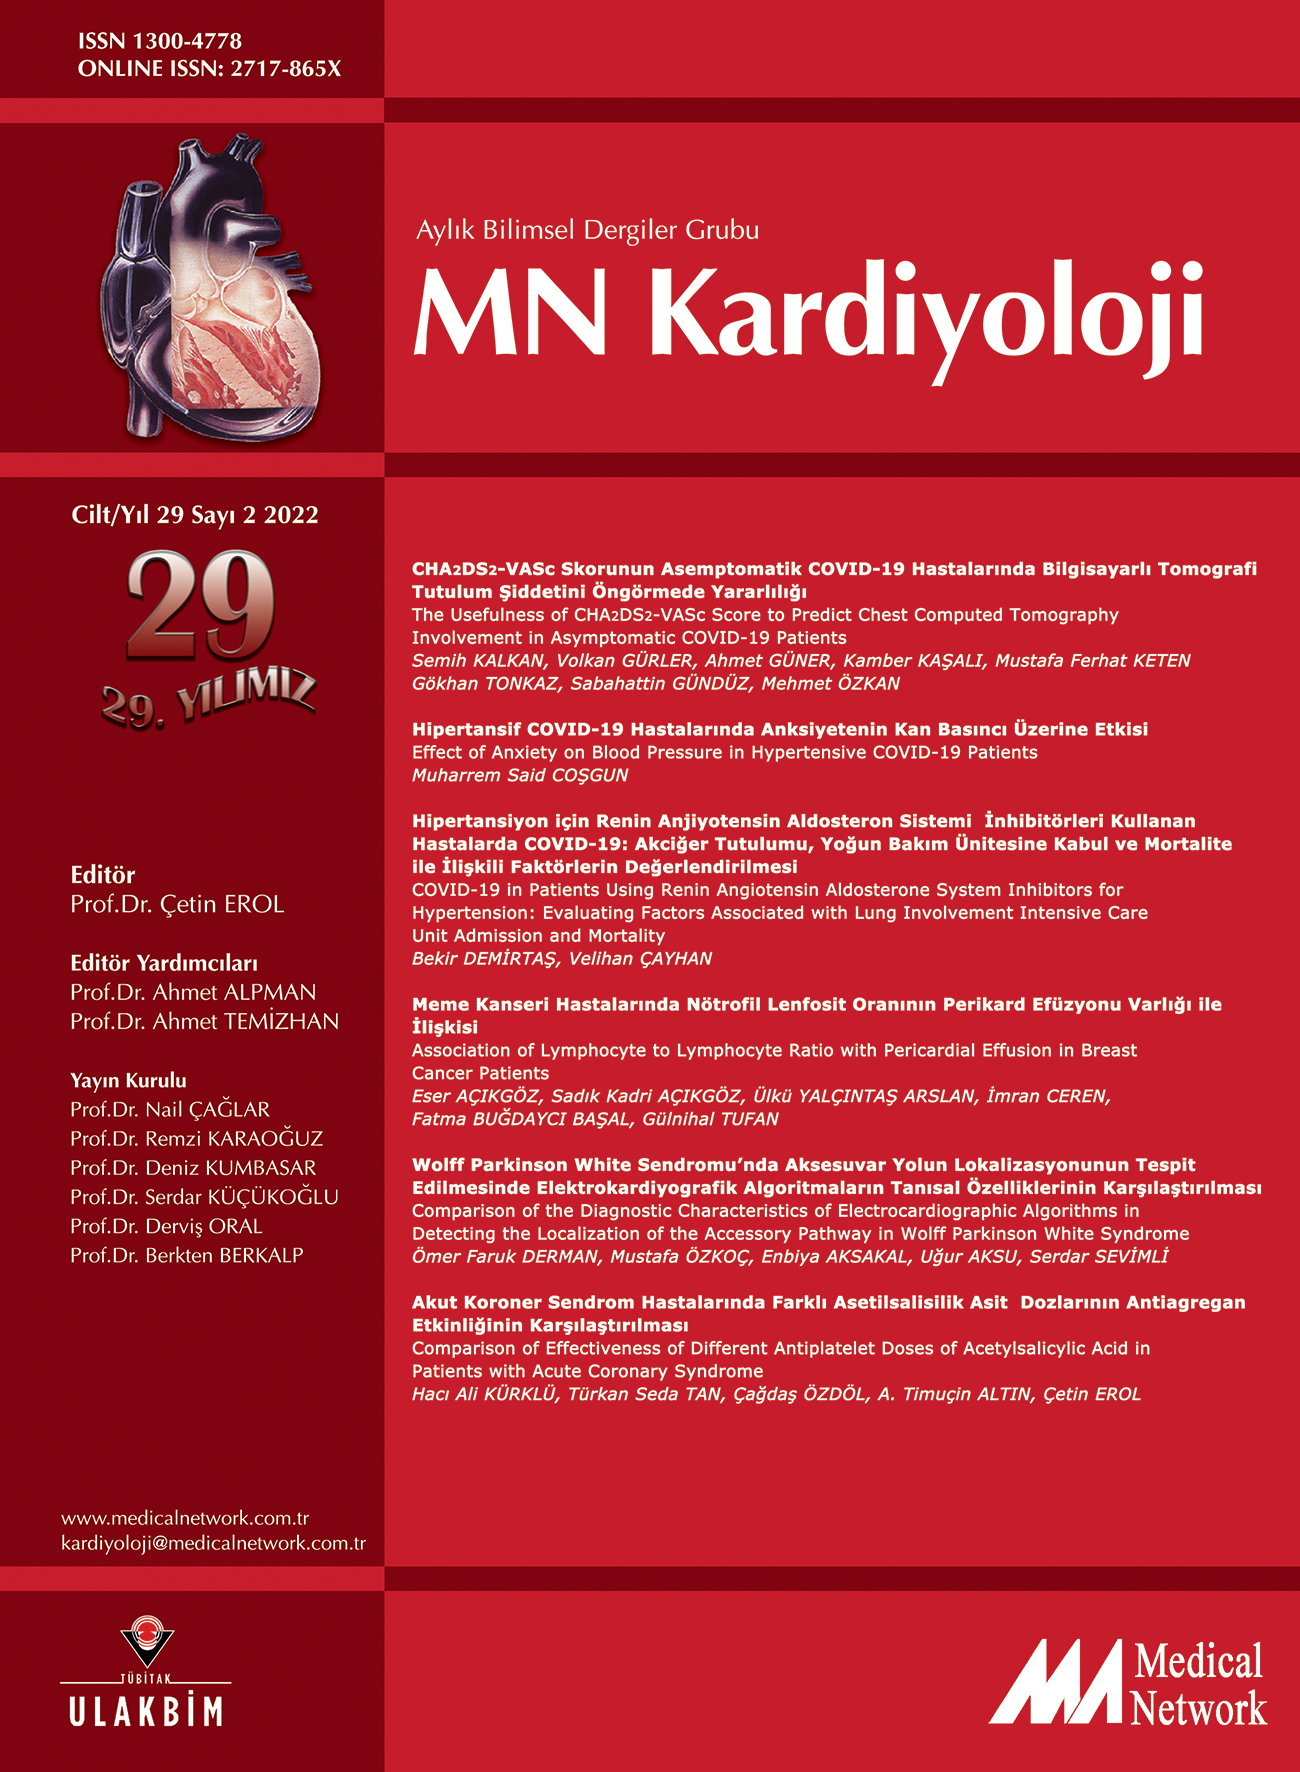 <p>MN Kardiyoloji Cilt: 29 Say: 2 2022 MN Cardiology Volume: 29 No: 2 2022</p>